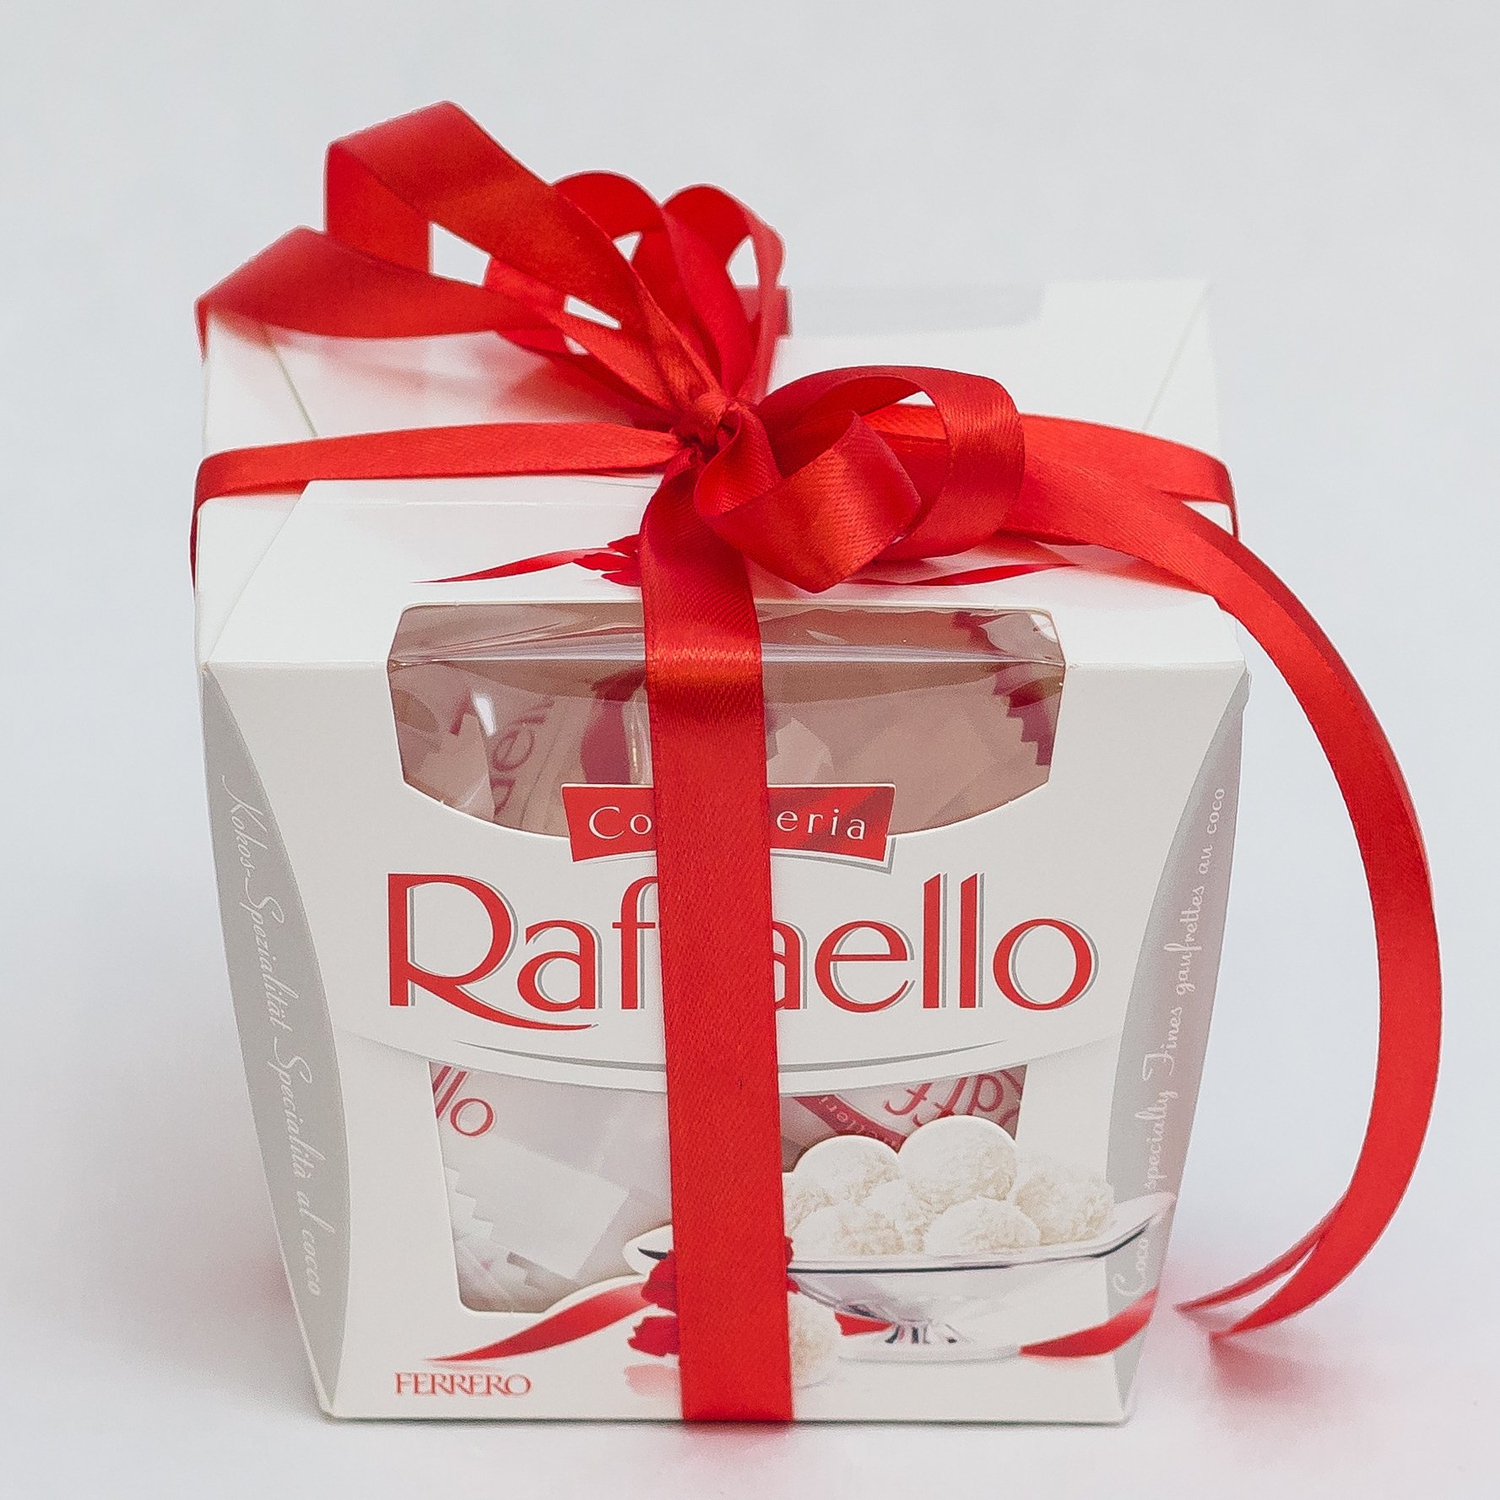 Рафаэлло 150 купить. Raffaello 150 гр.. Рафаэлло конфеты 150 гр. Набор конфет Раффаэлло т15 150гр (976) 1*6/12. Конфеты Raffaello коробка 150гр.